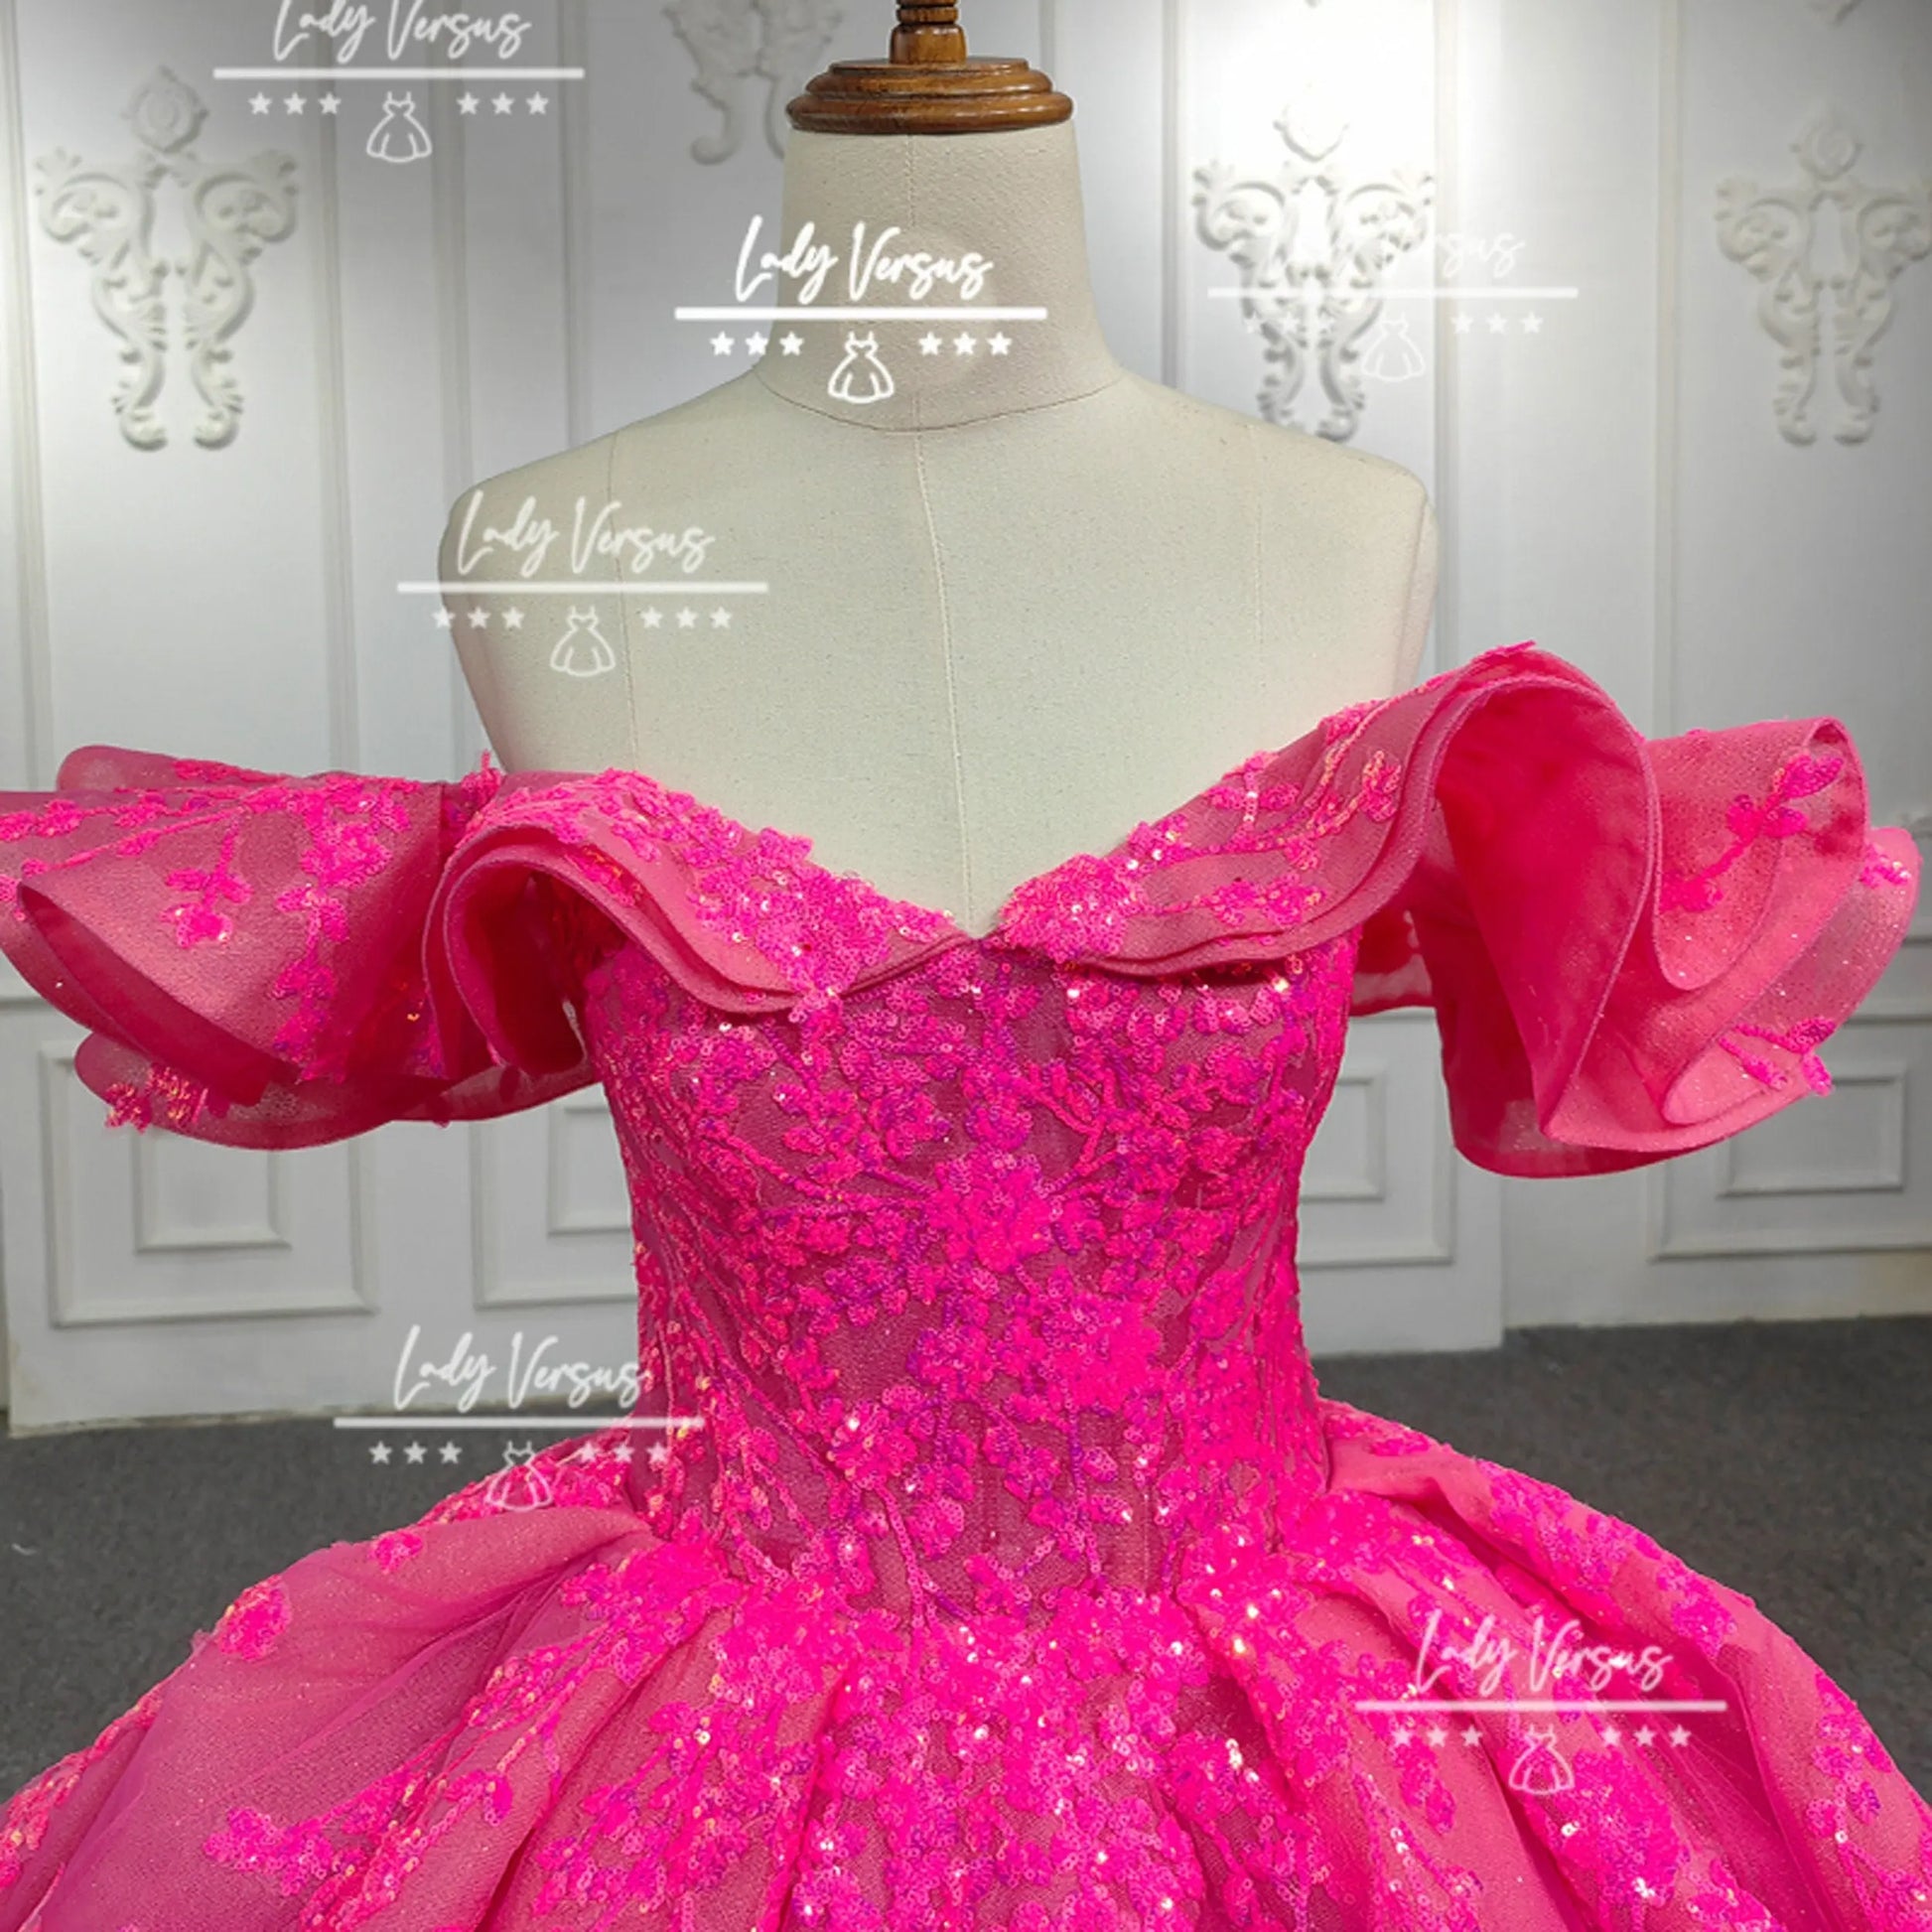 Luxury bridal princess dress/ Extravagant bridal gown/Gorgeous appliqué skirt wedding dress/ ball gown/prom dress Lady Versus